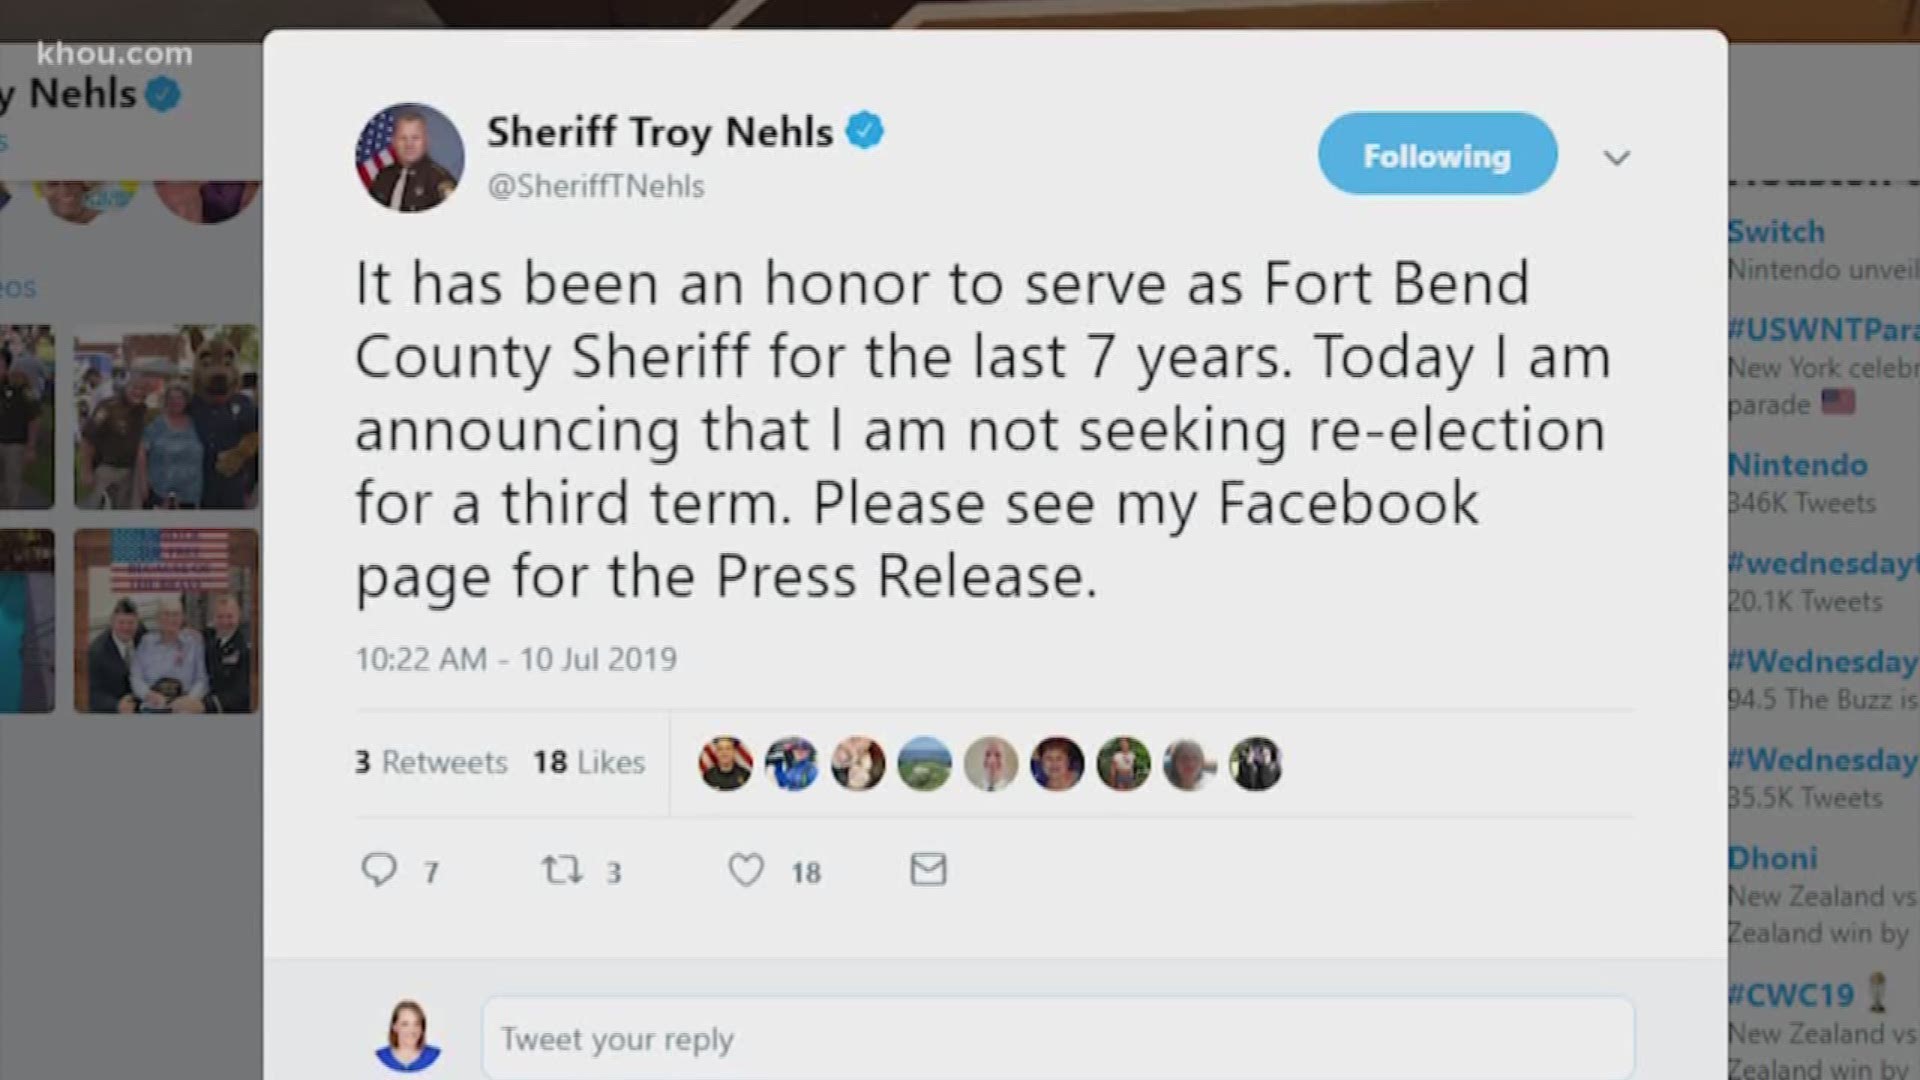 Sheriff Troy Nehls announces he is not seeking re-election.